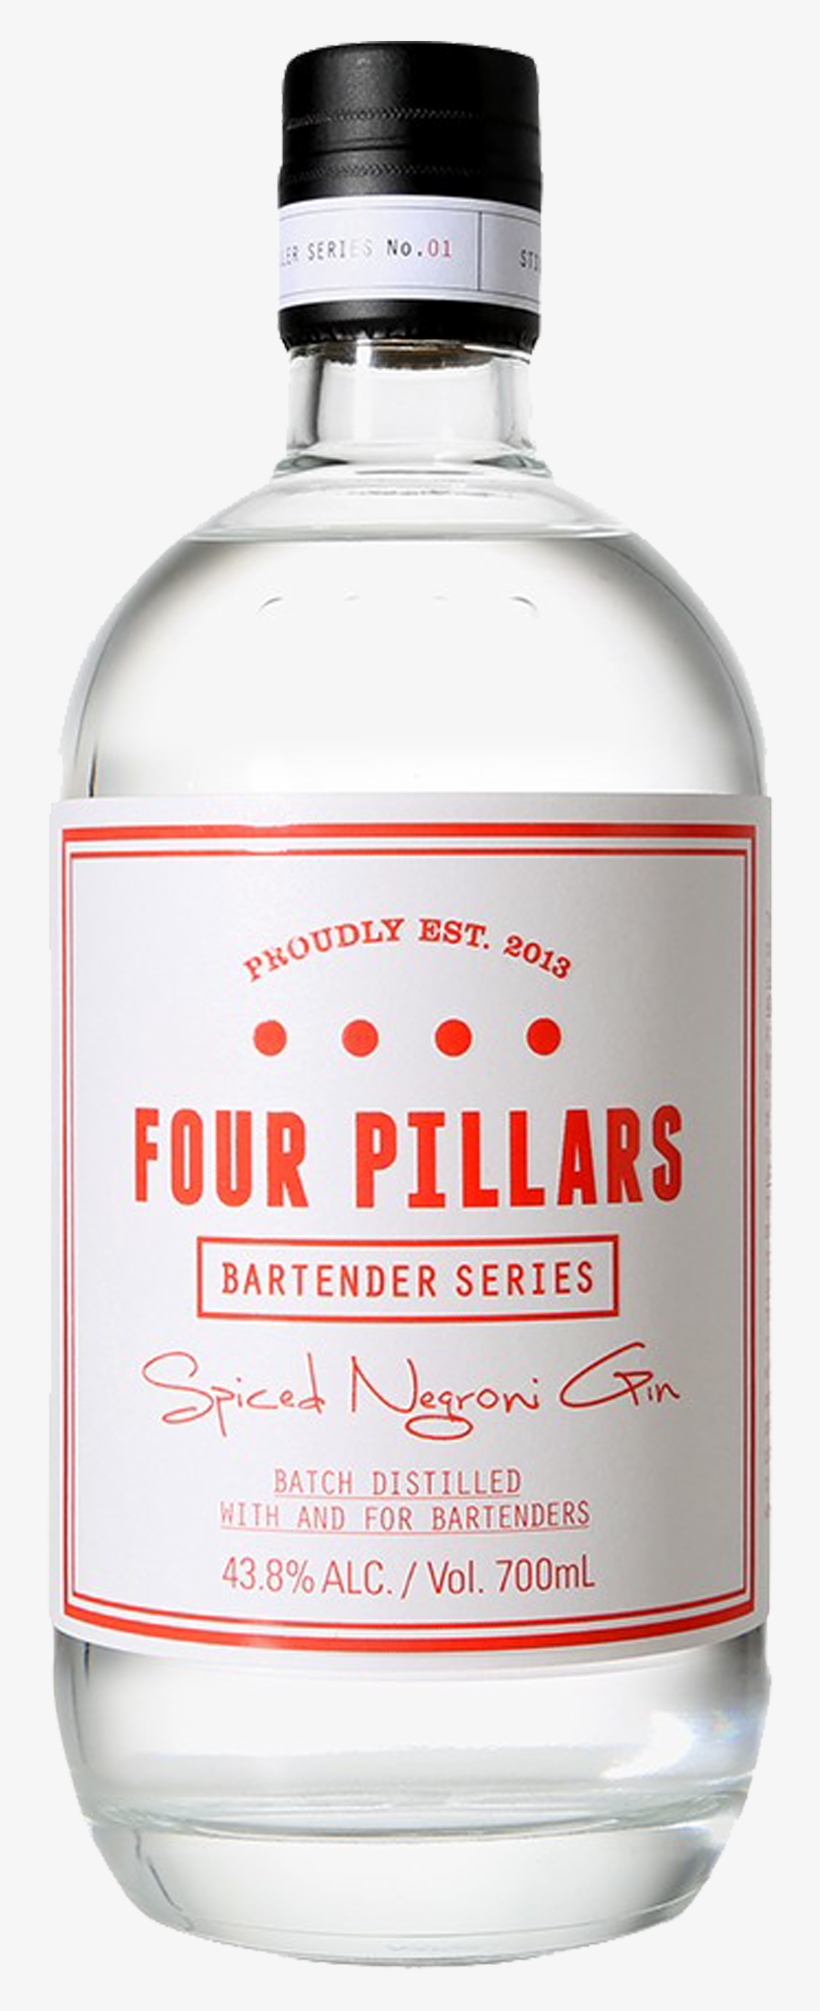 Details About Four Pillars Bartender Series Spiced - Four Pillars Negroni Gin, transparent png #9695857